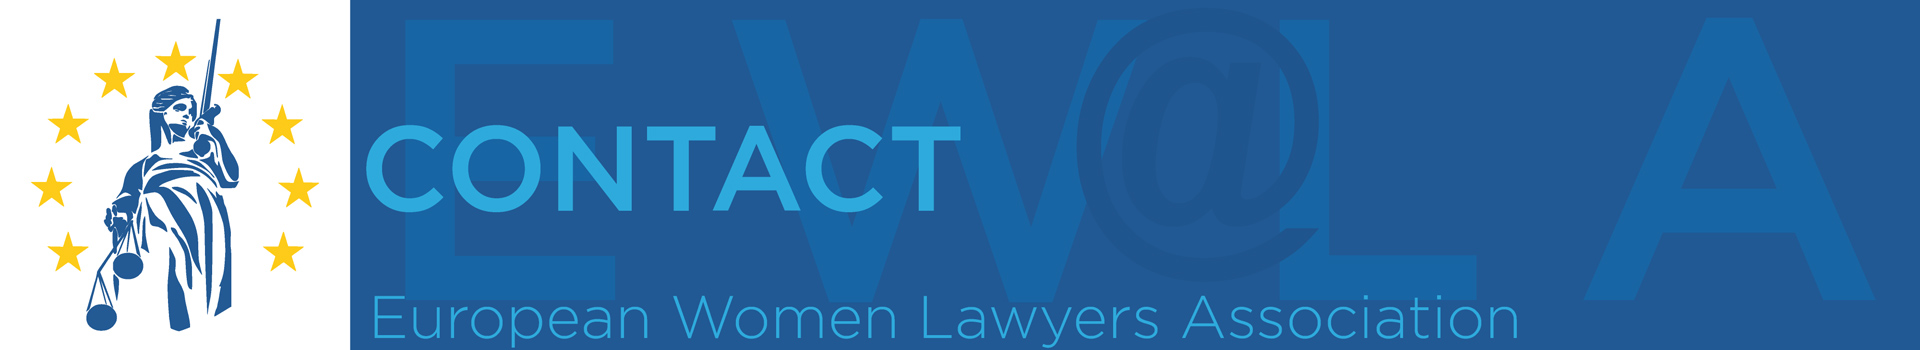 EWLA Contact - European Women Lawyers Association